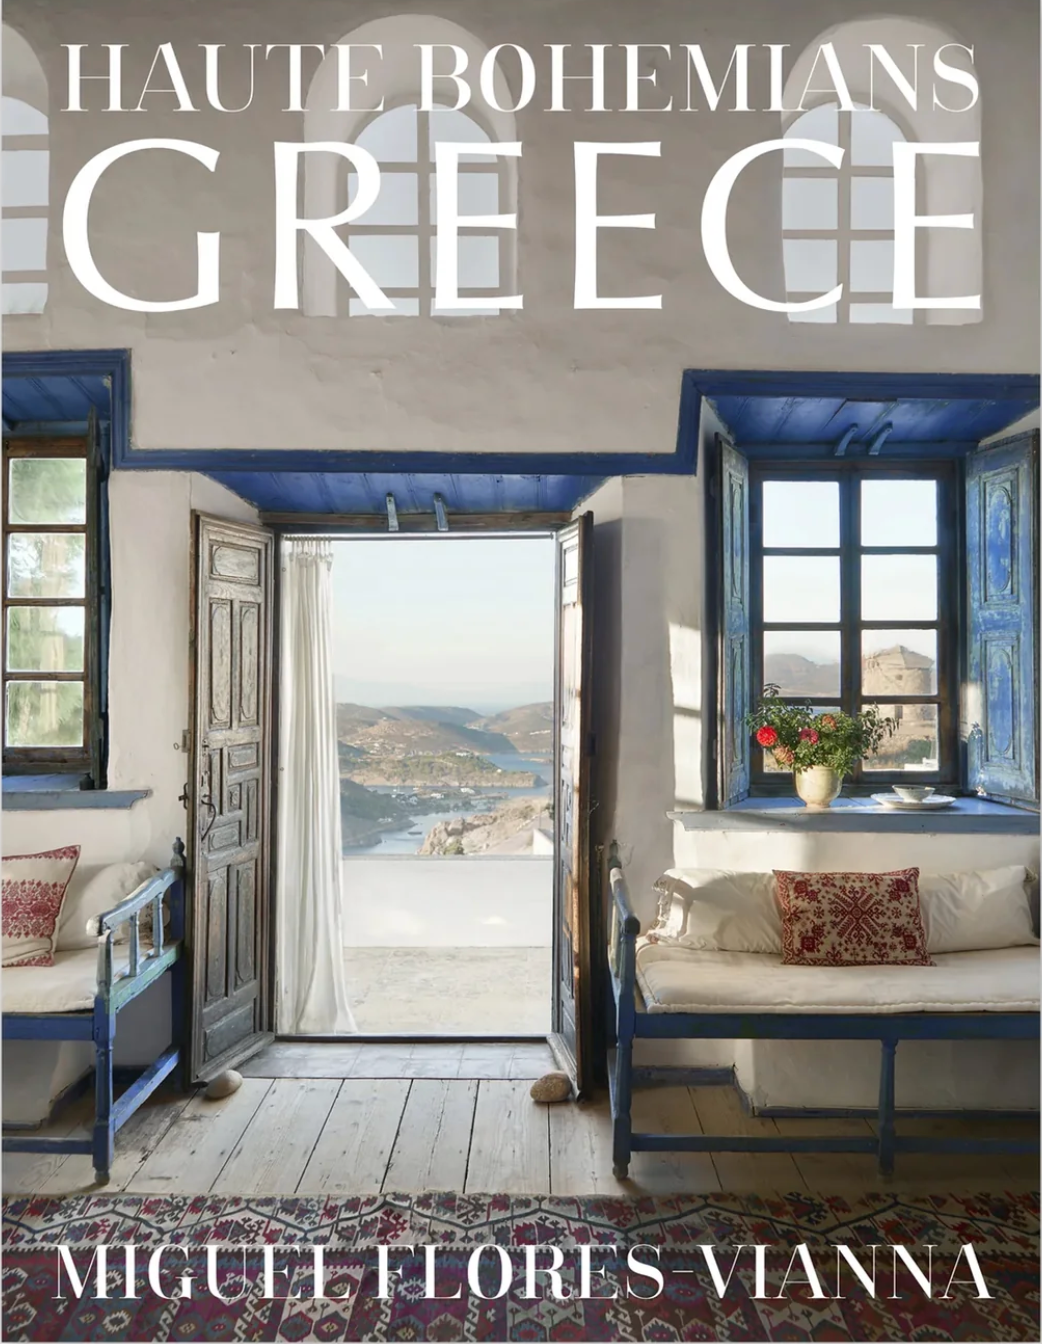 Book - Haute Bohemians Greece Hardcover